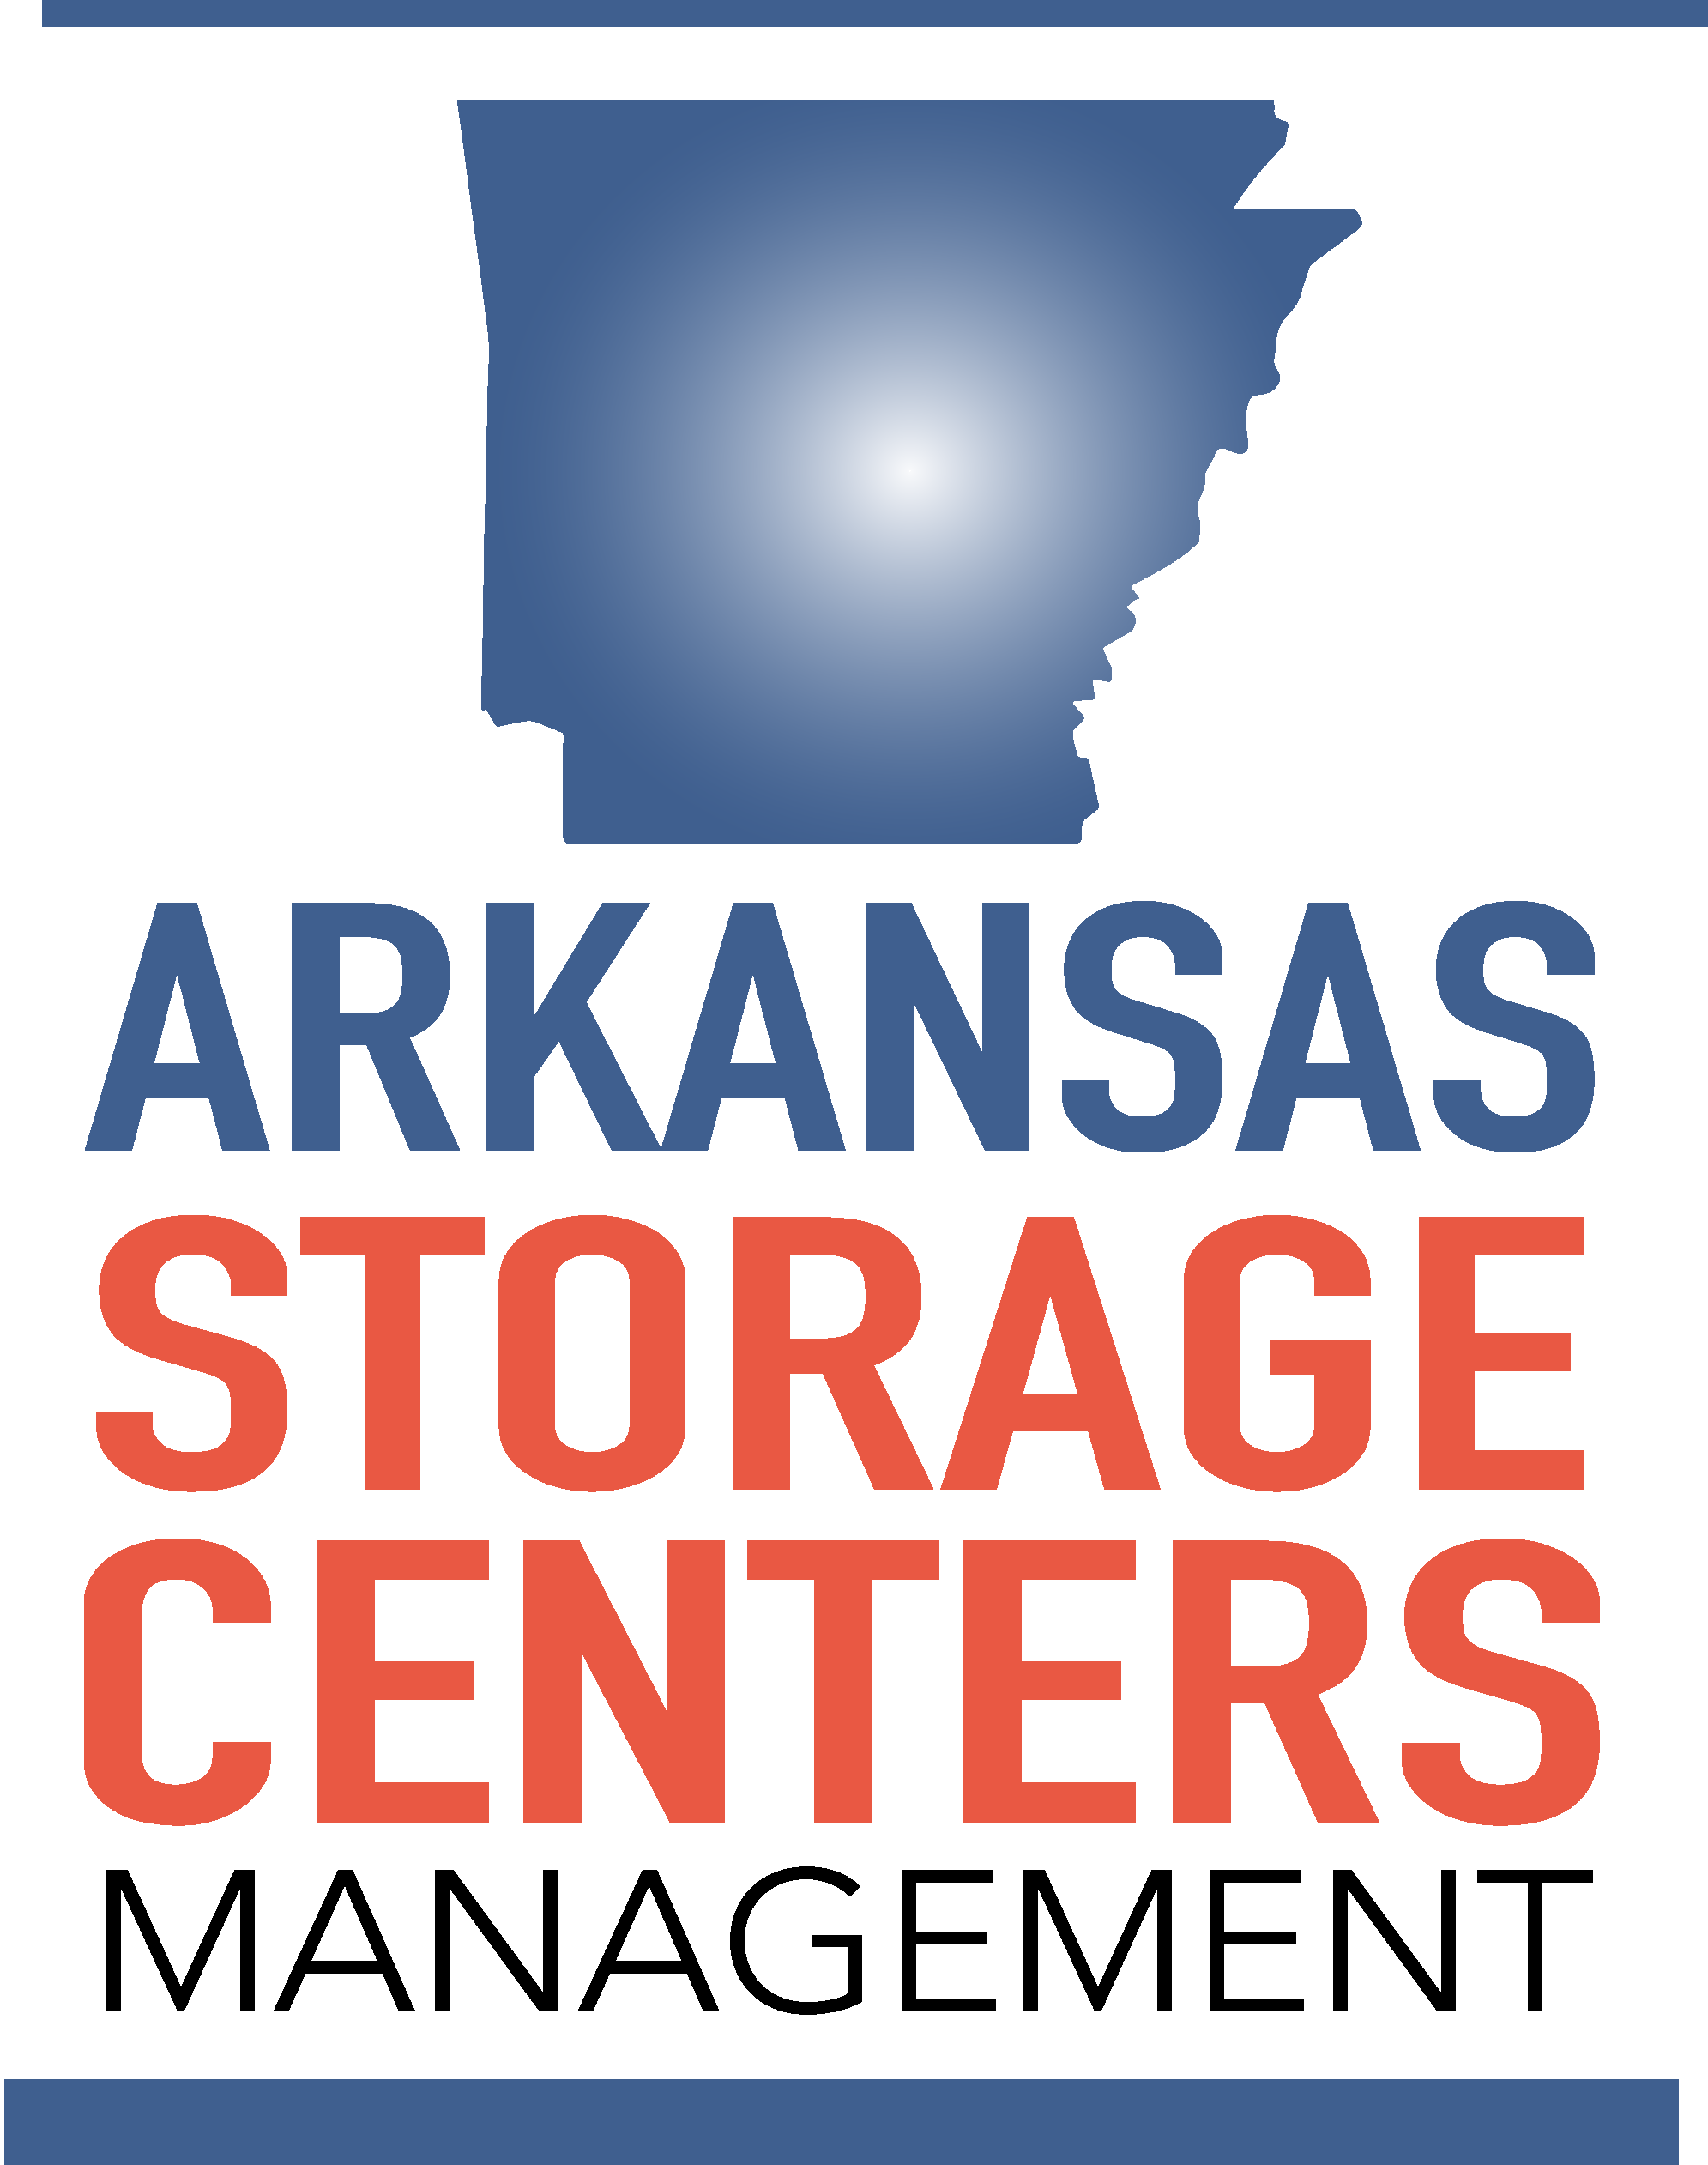 Arkansas Storage Centers Management logo